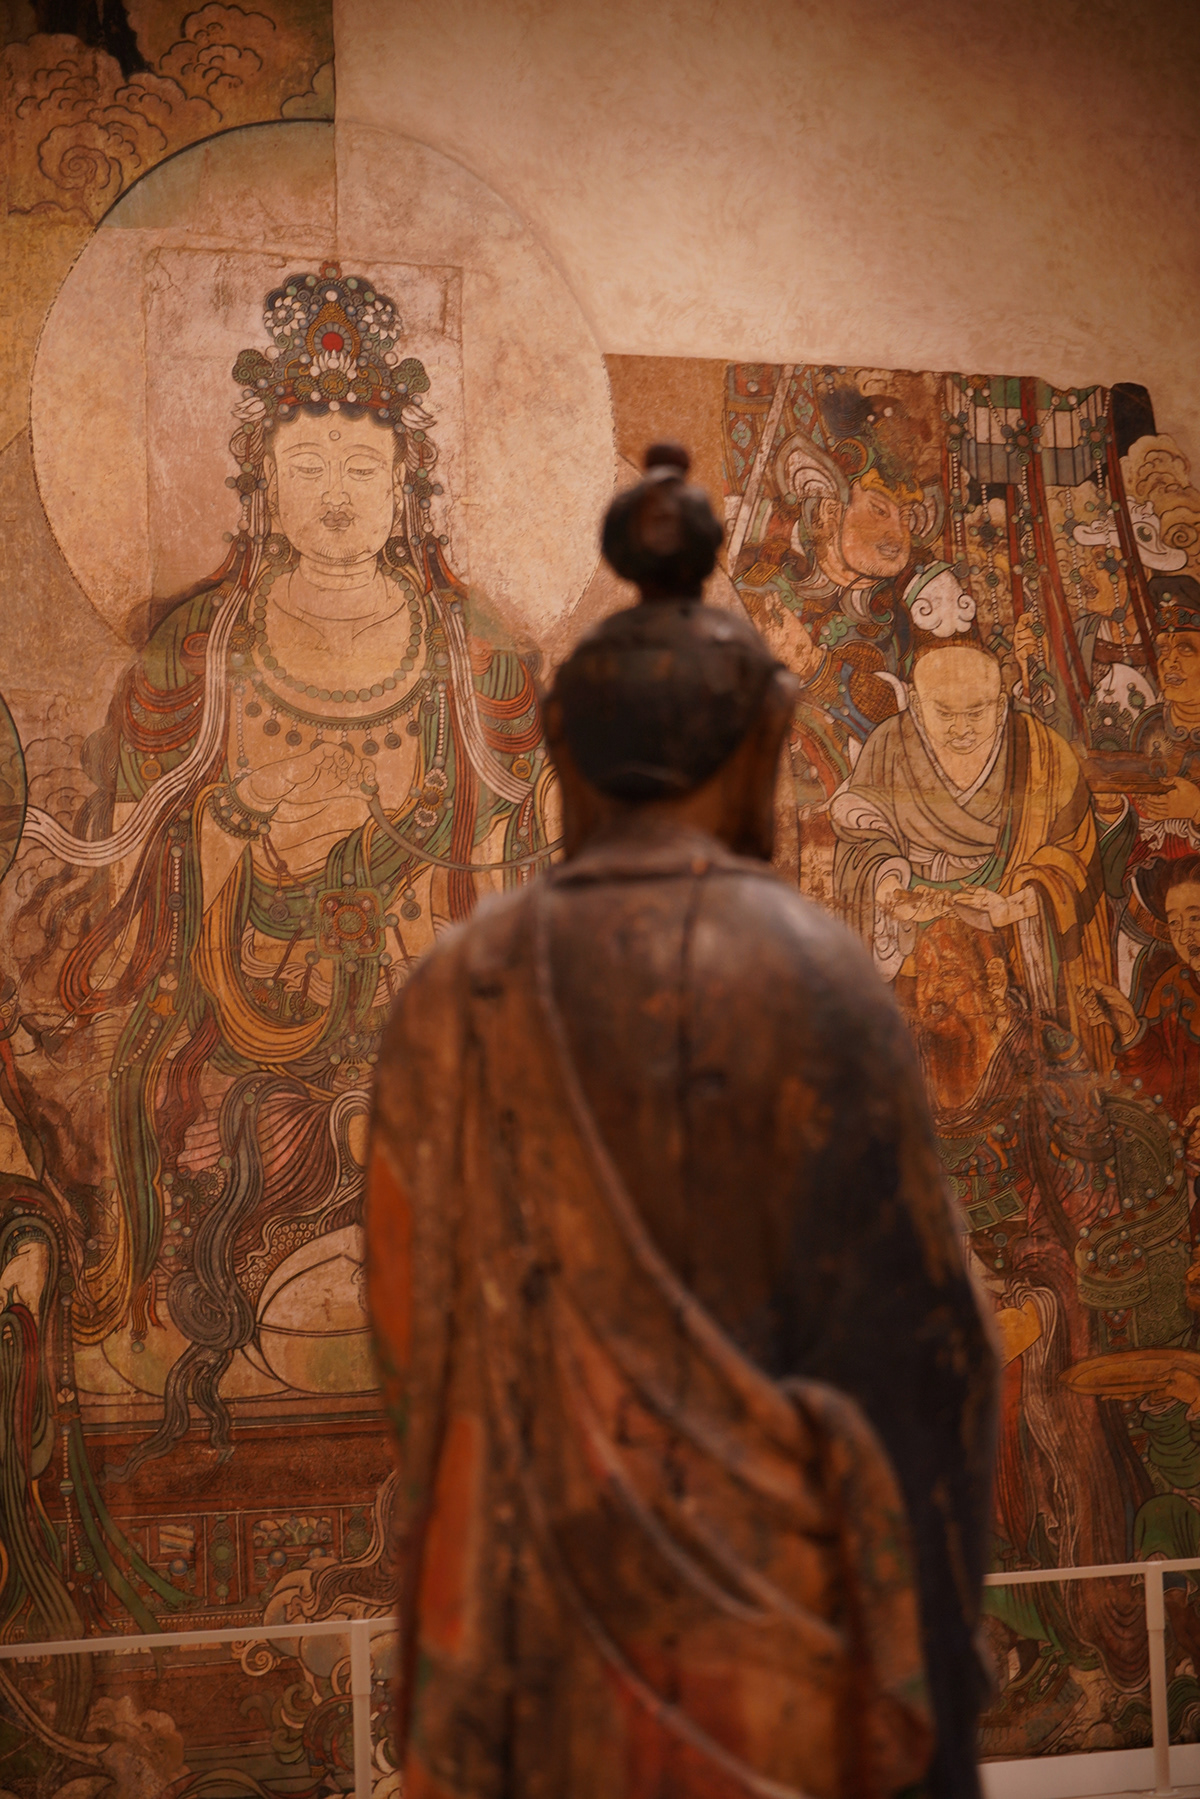 Ancient Buddhist china culture